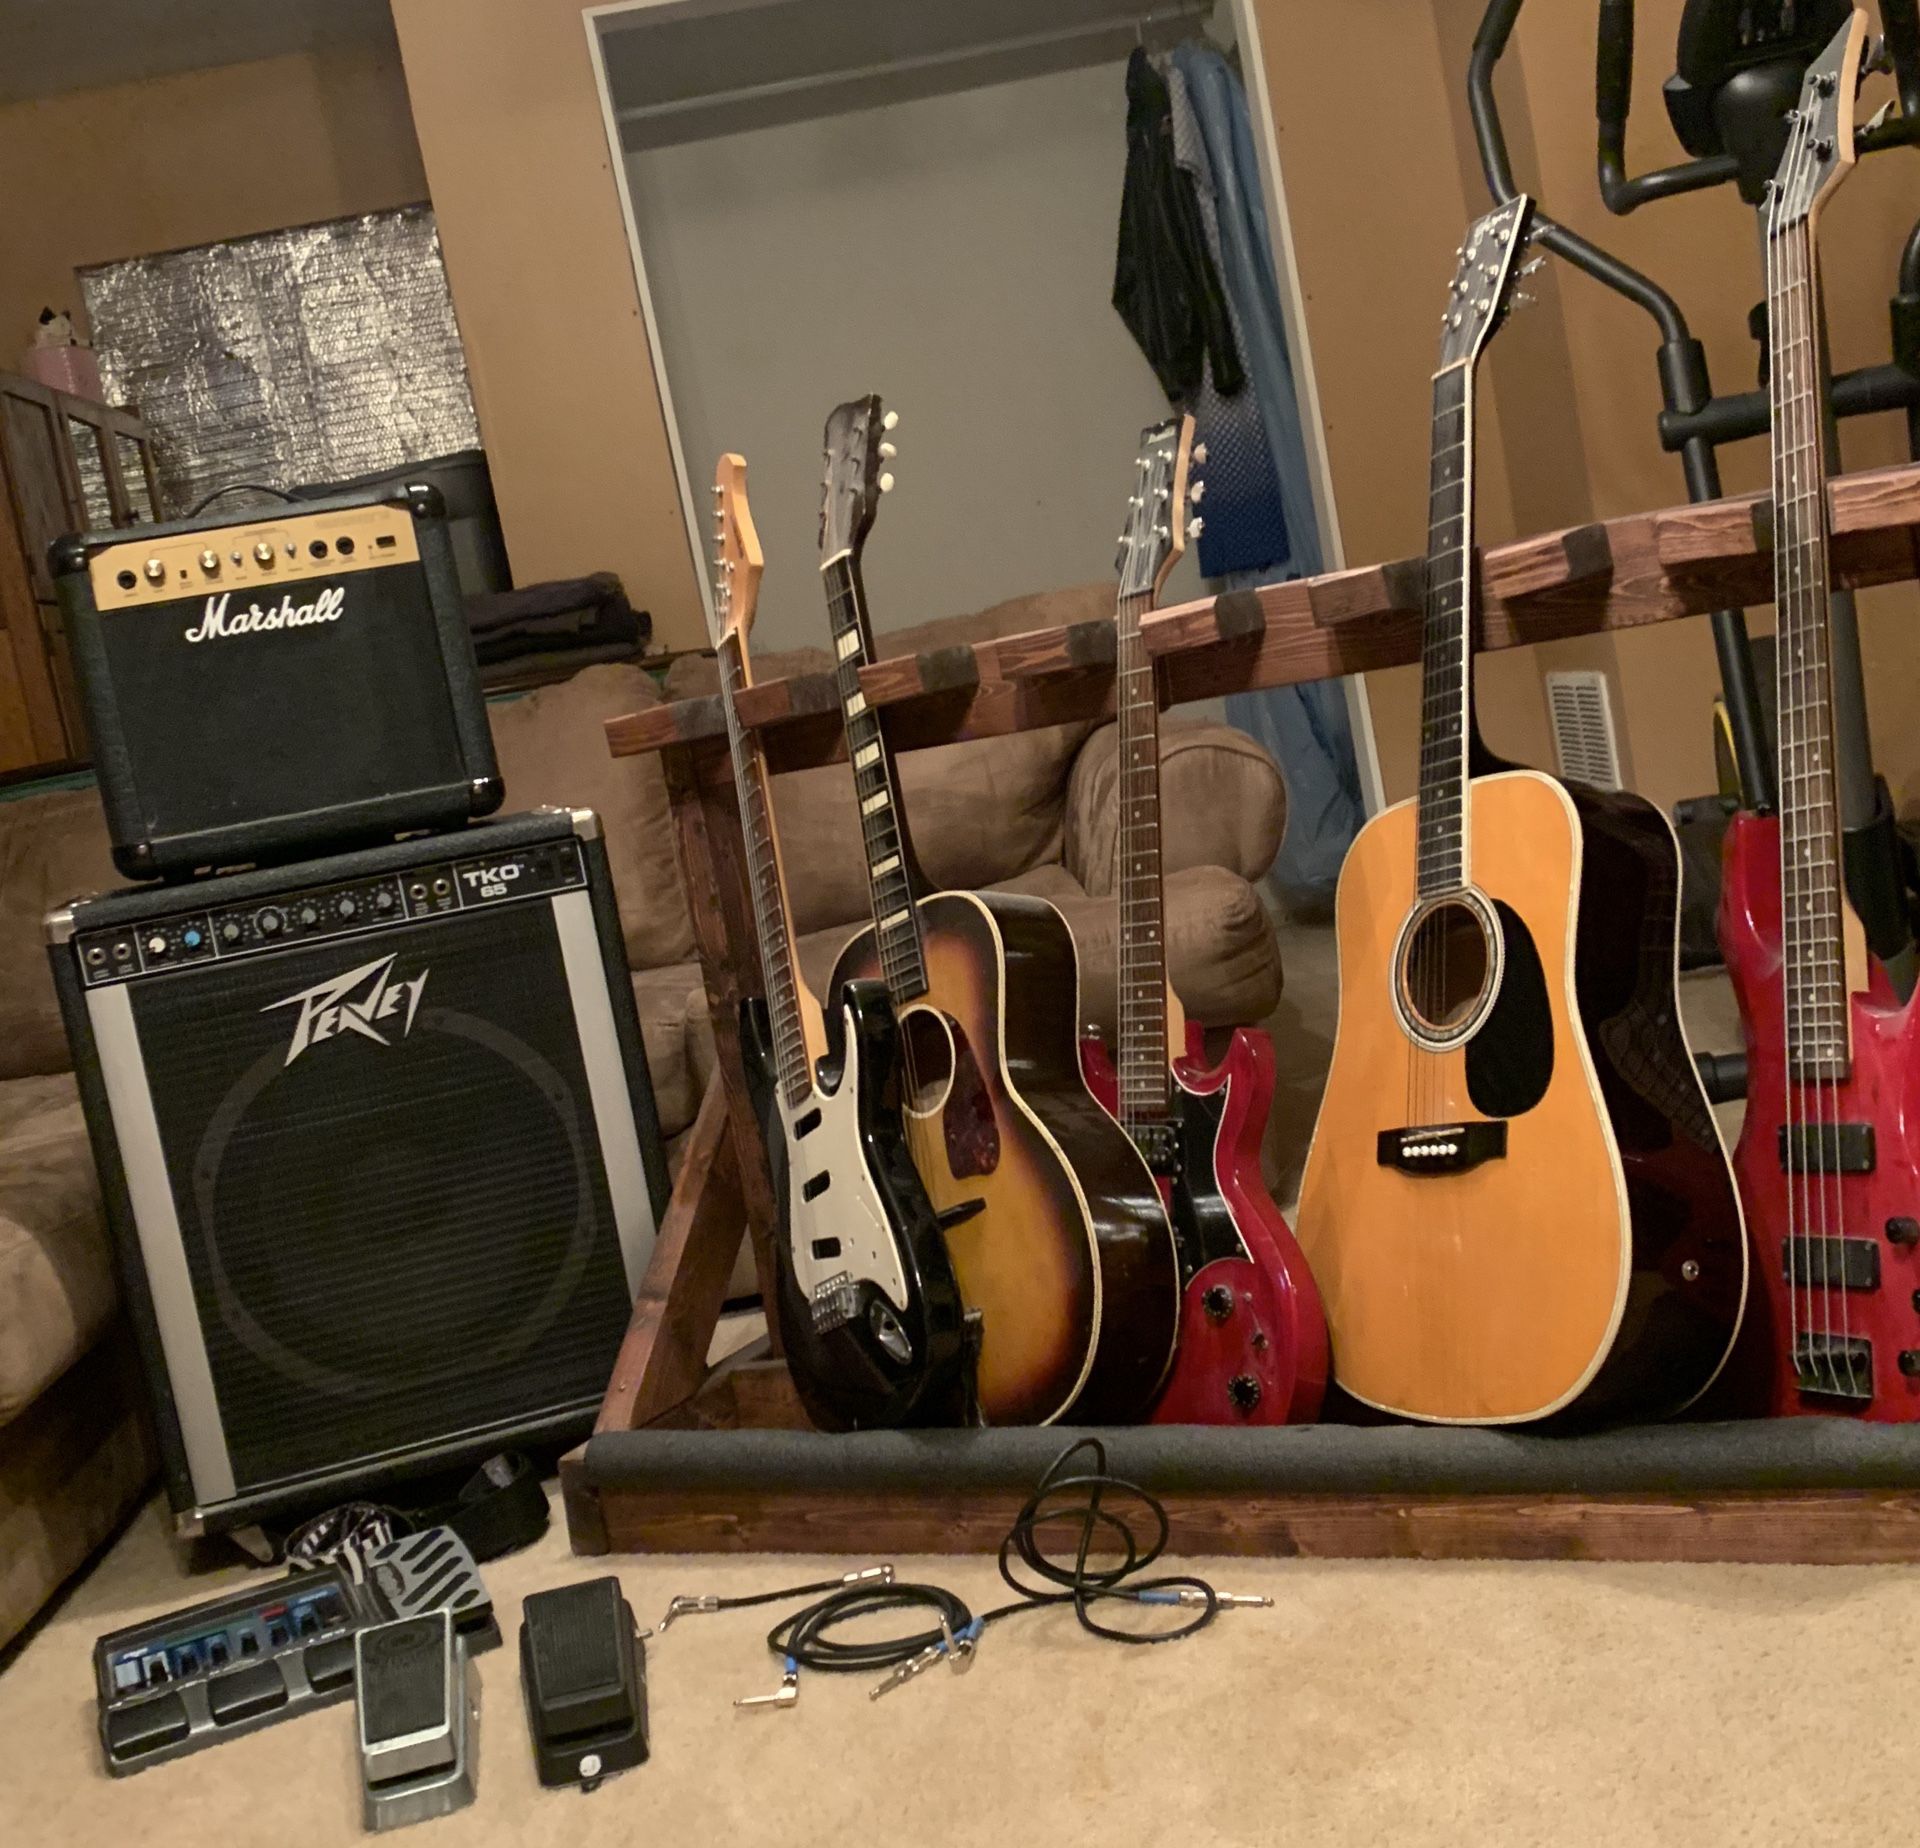 Bunch of guitars/equipment